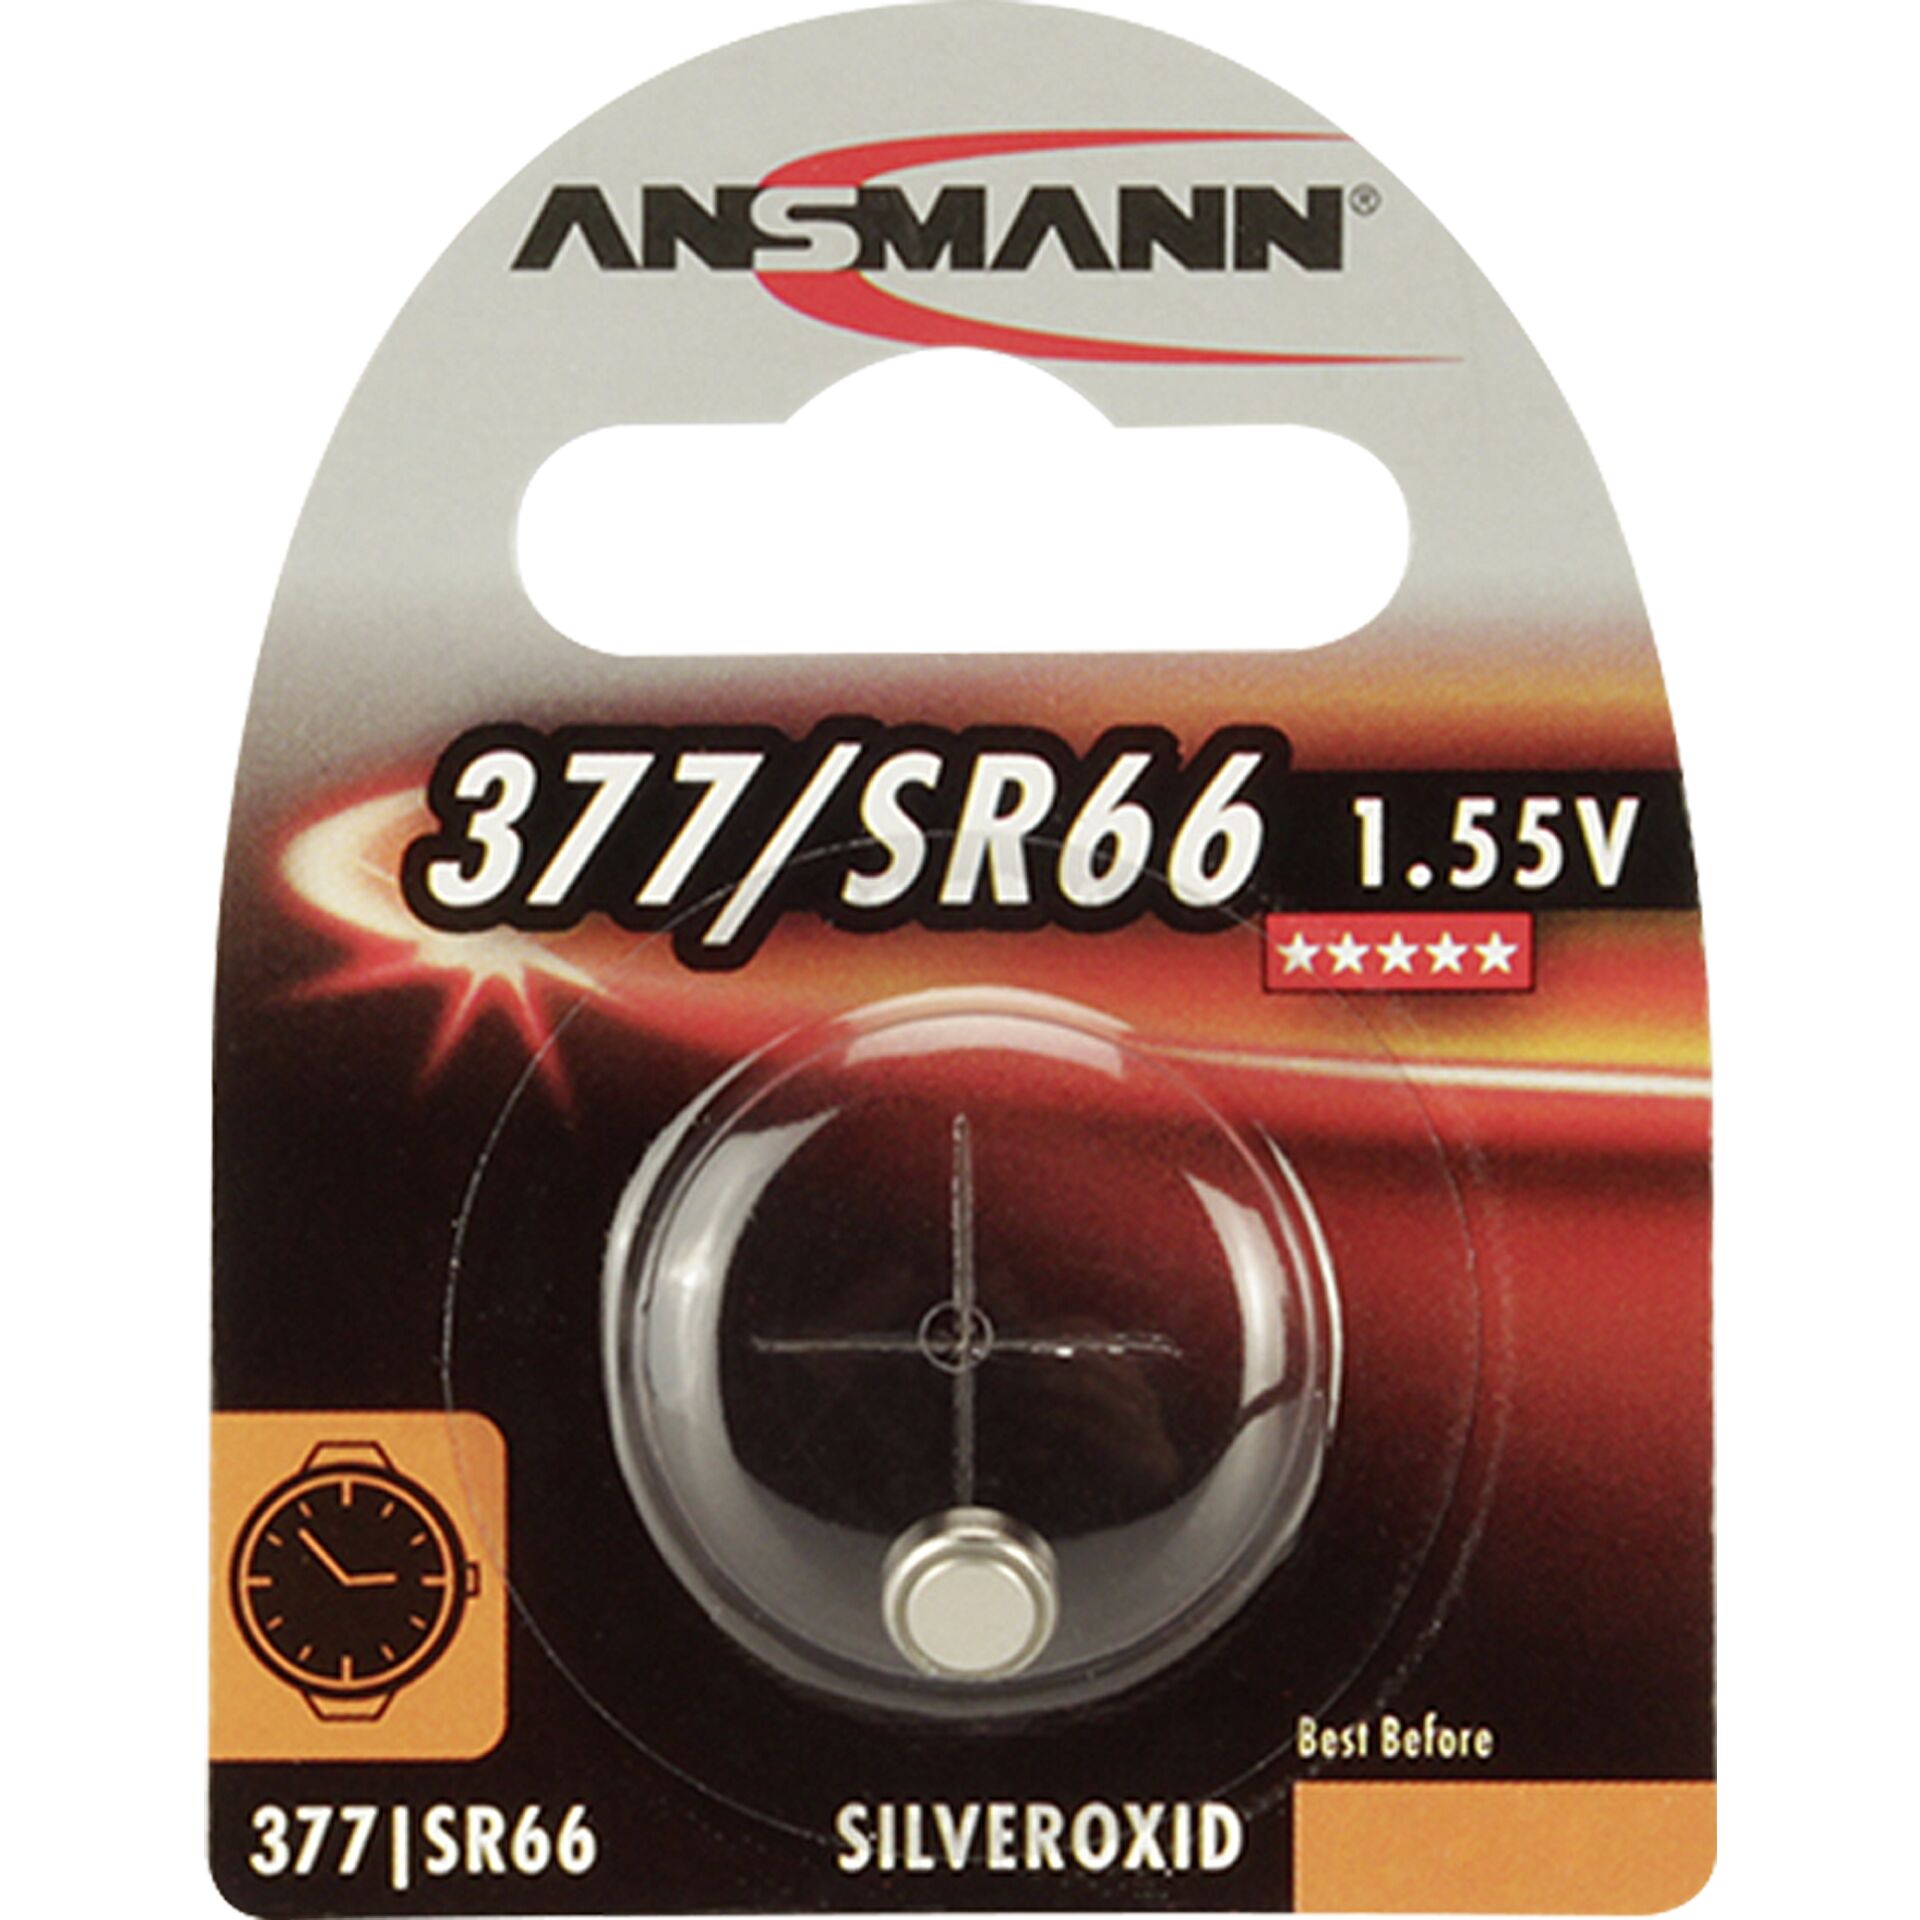 10x1 Ansmann 377 Silveroxid SR66 VPE inner box